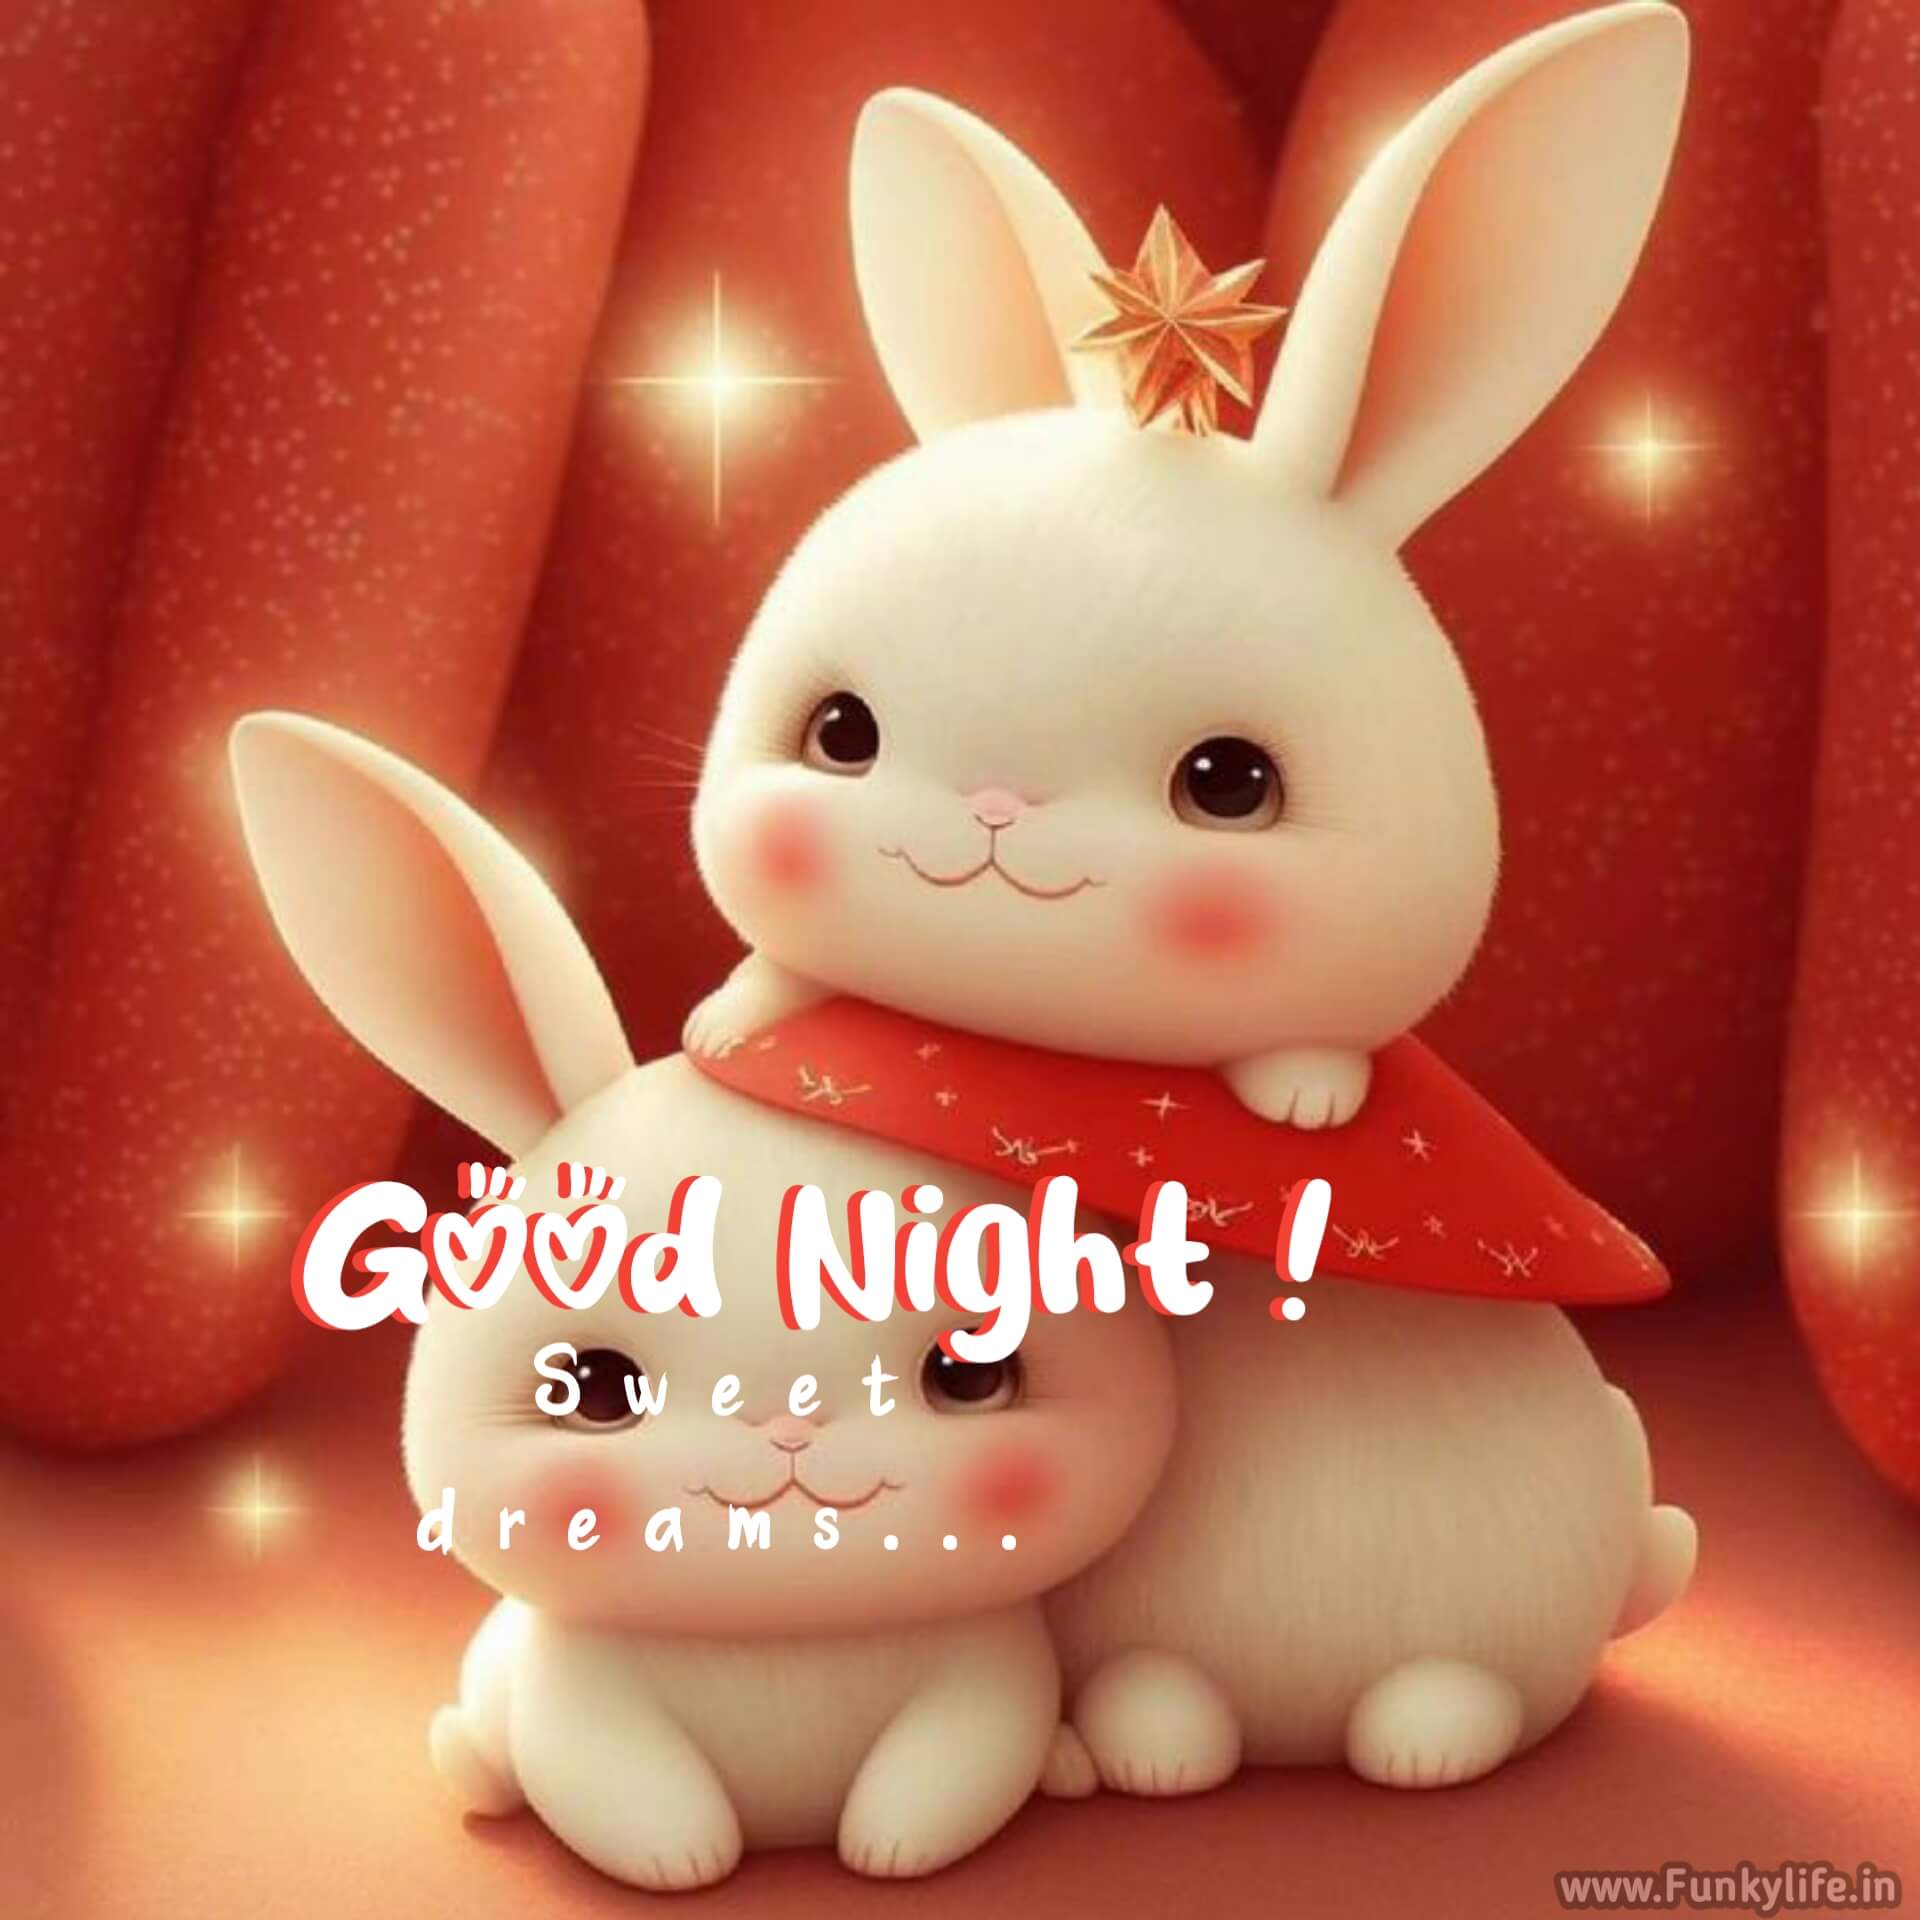 Cute Good night image